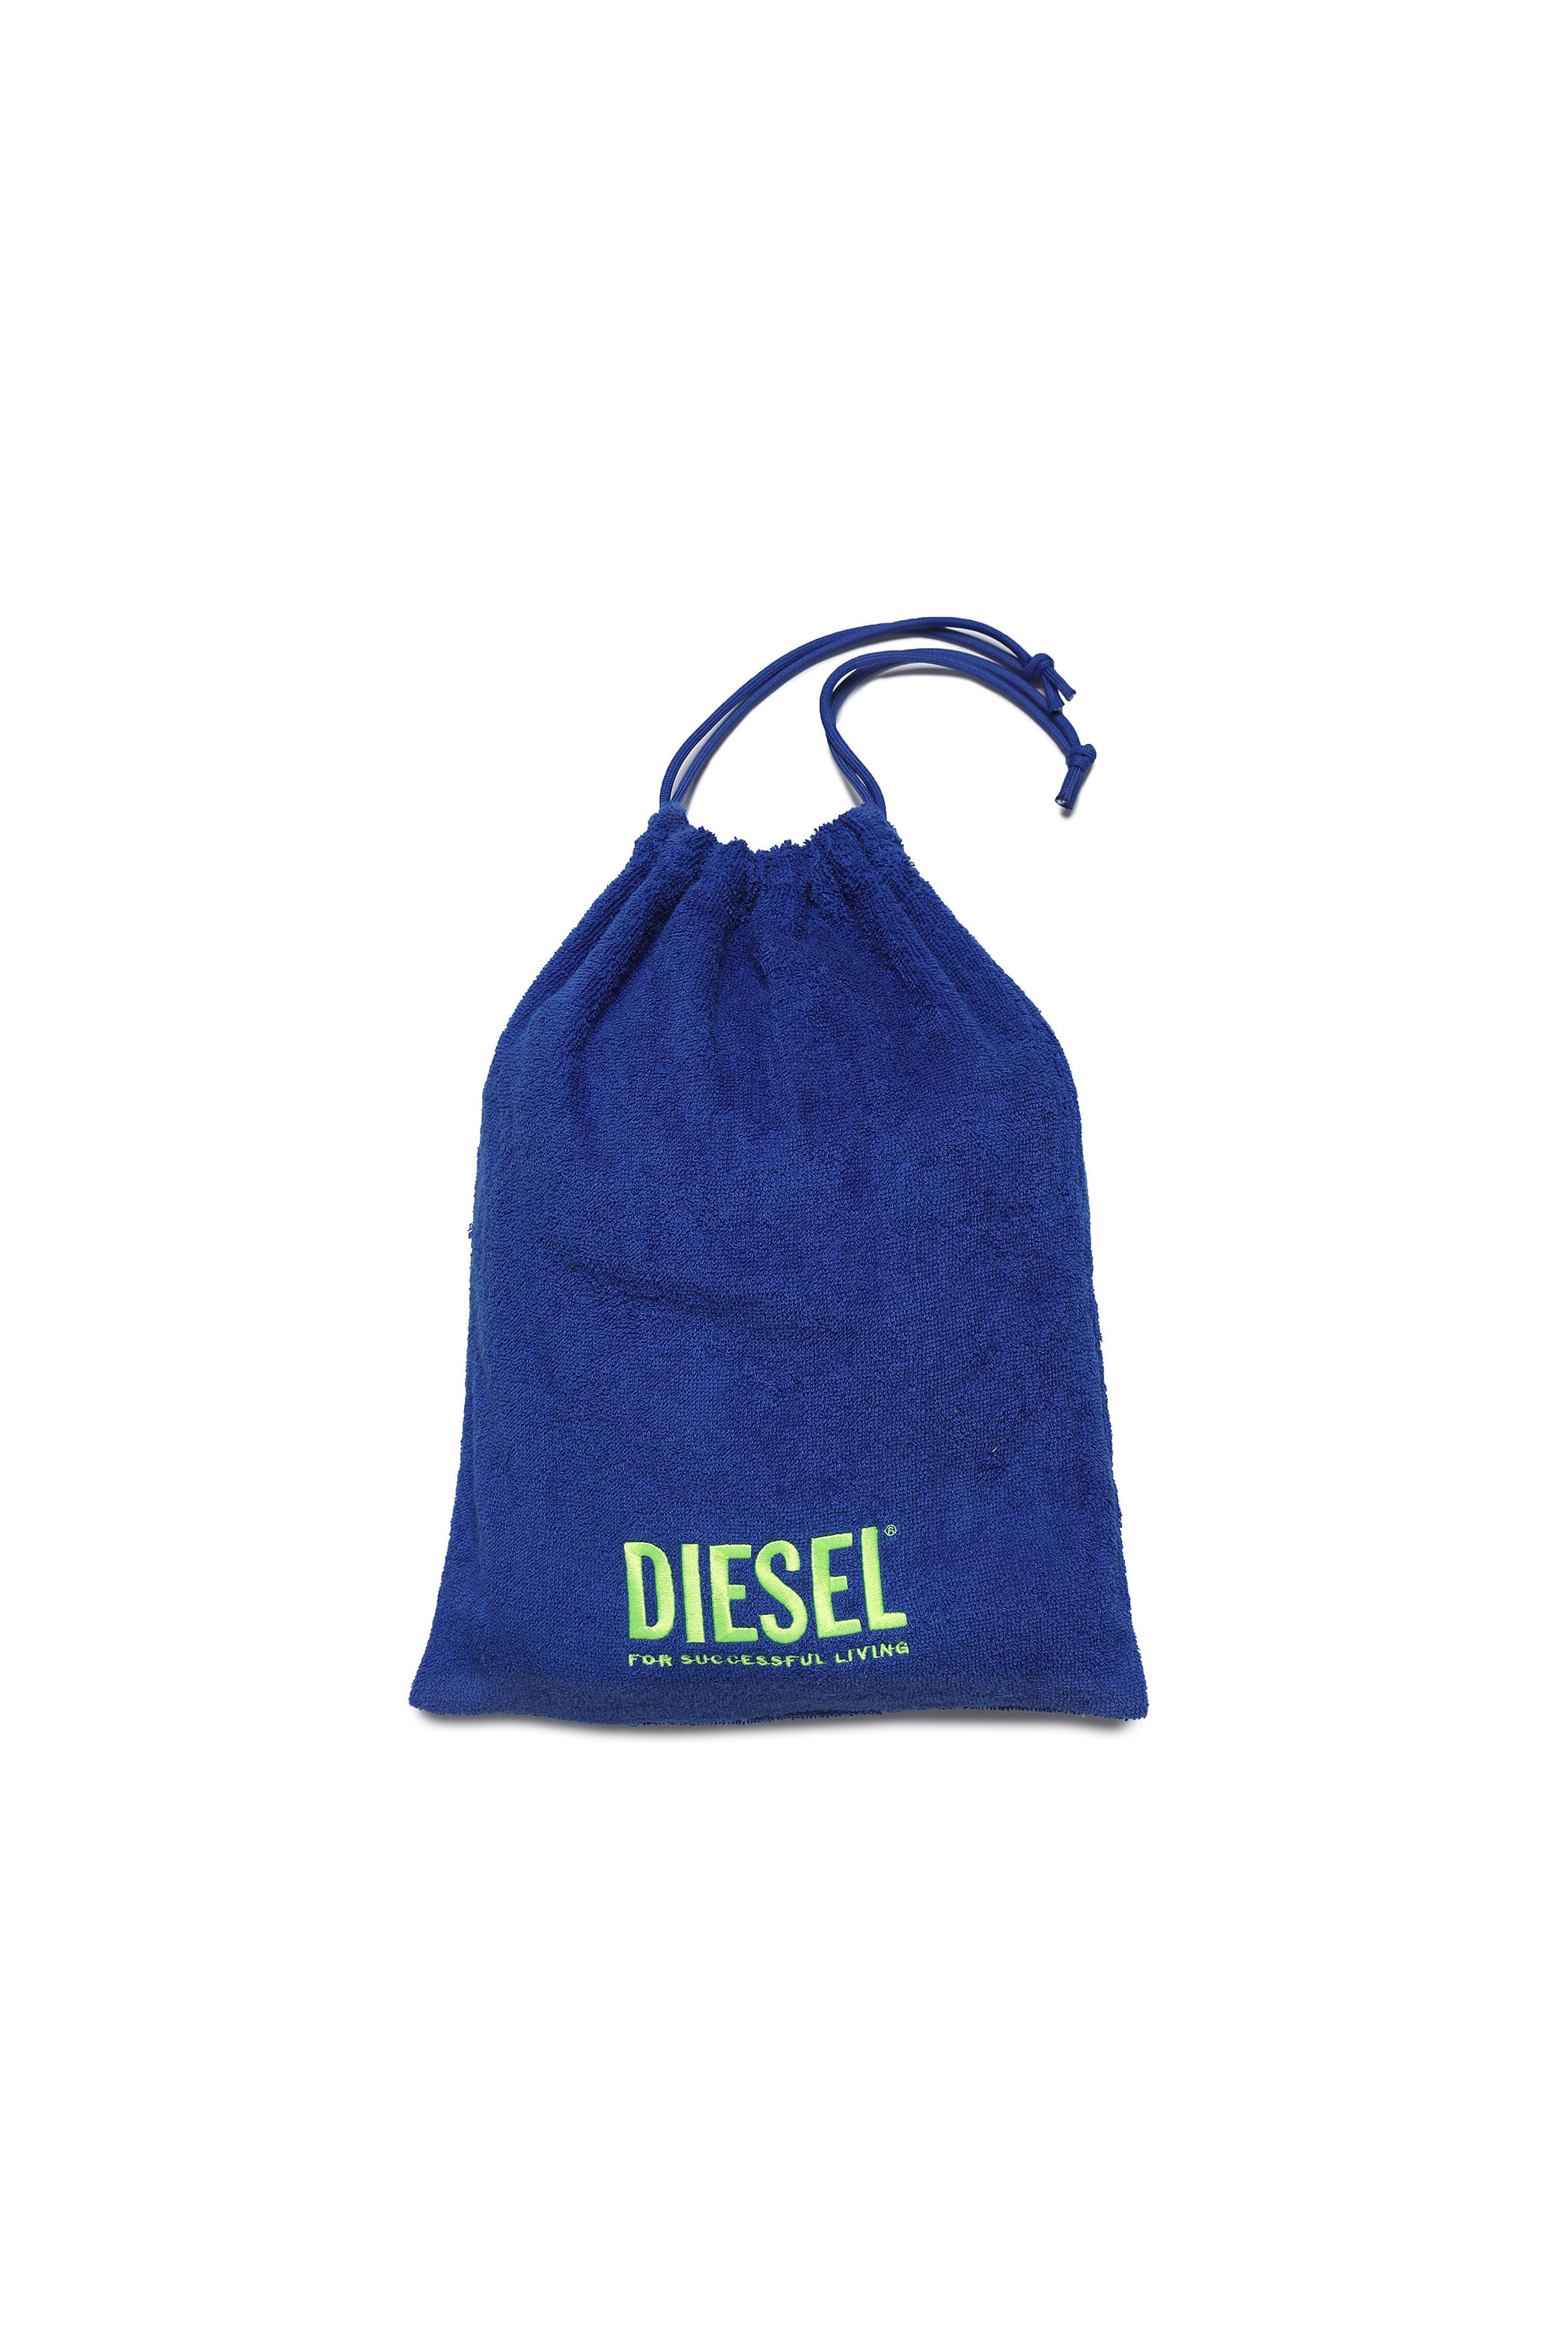 Diesel - MANDRYB, Blue - Image 3